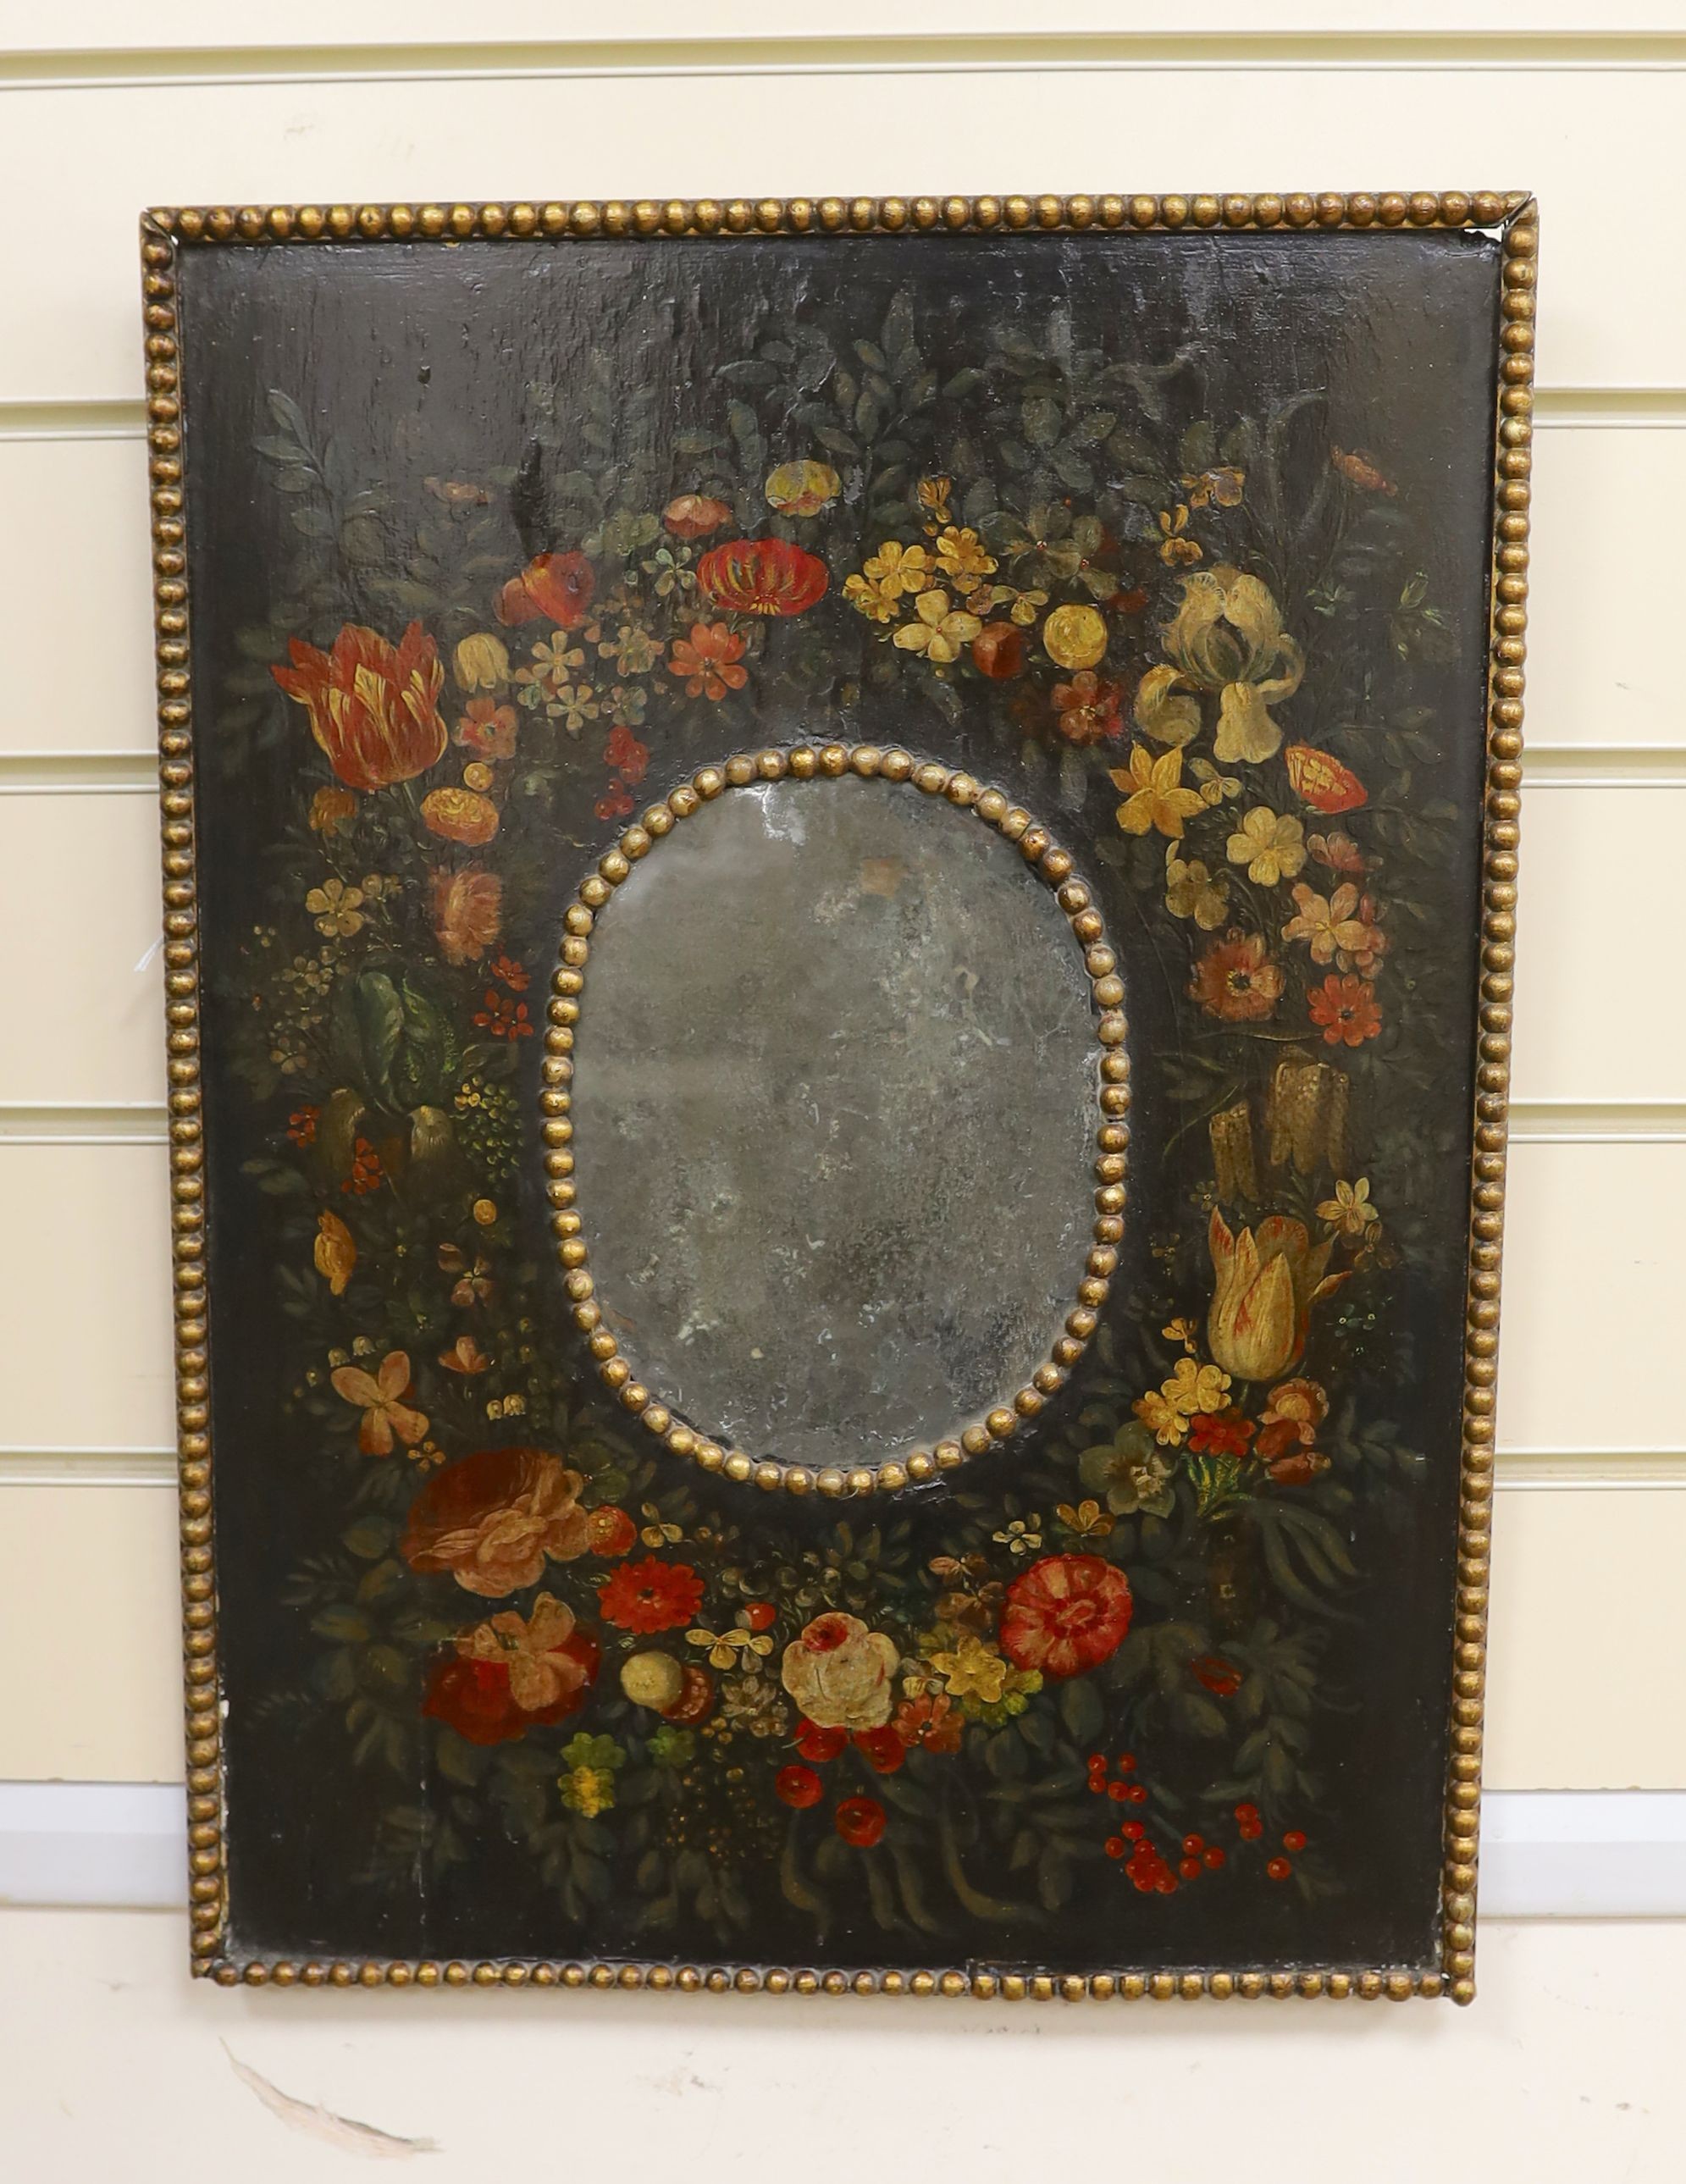 A small 18th century rectangular Dutch painted wall mirror